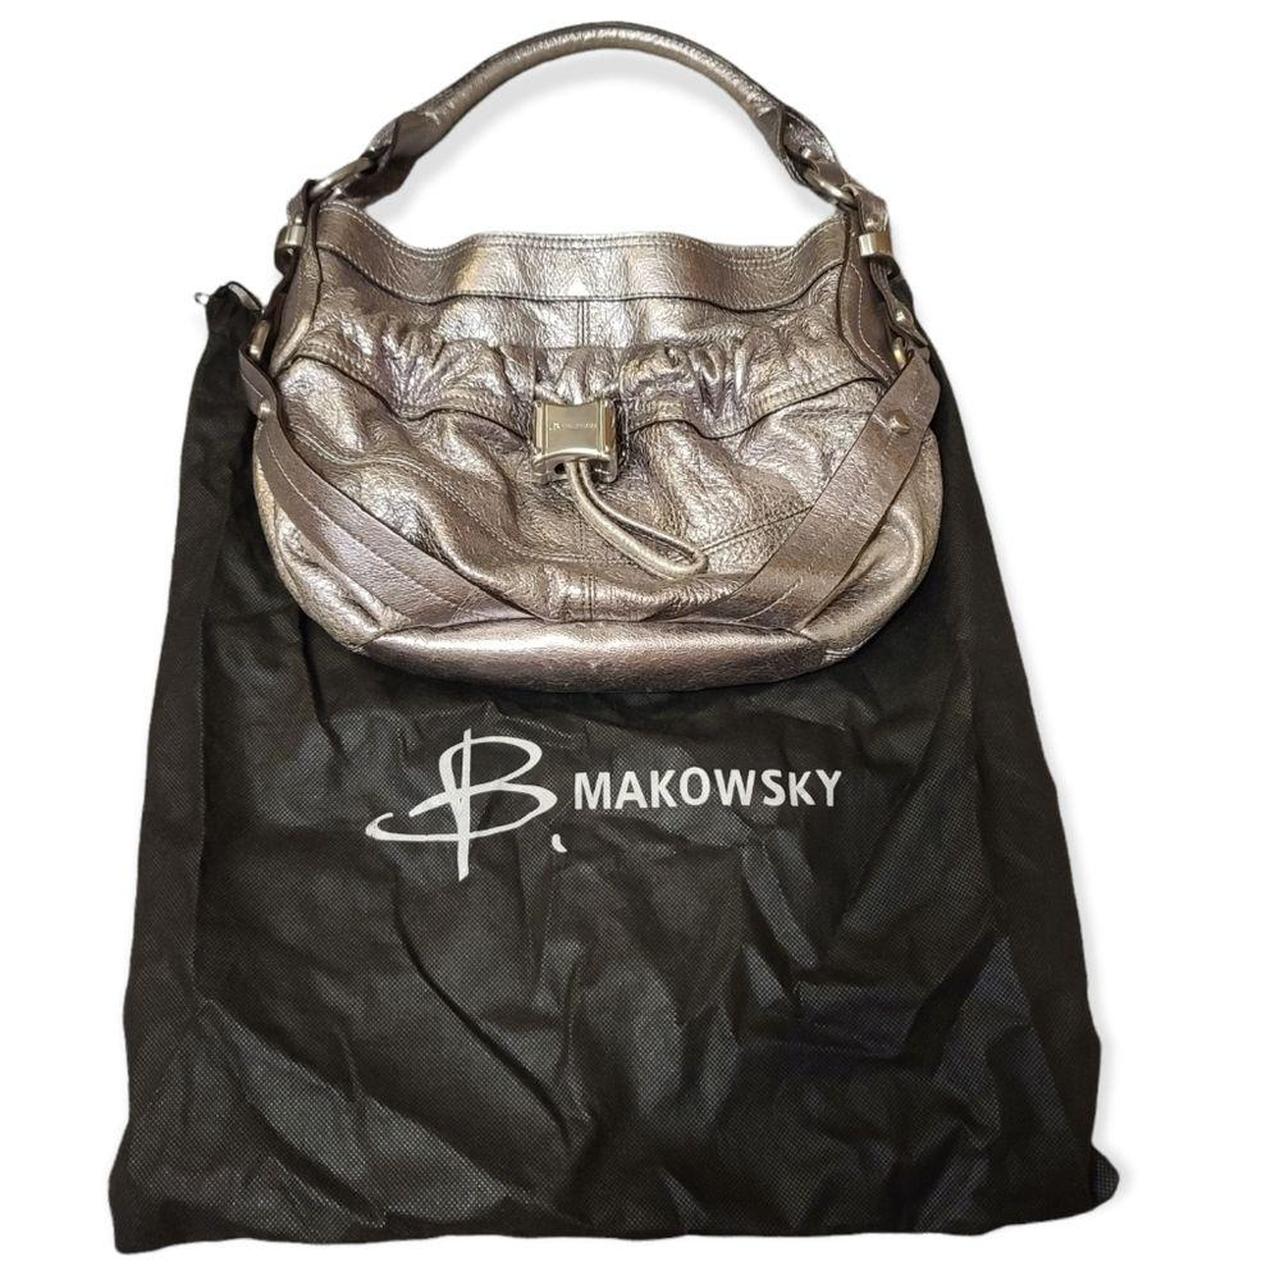 b. makowsky | Bags | B Makowsky Silver Westbourne Pebbled Leather Bag |  Poshmark